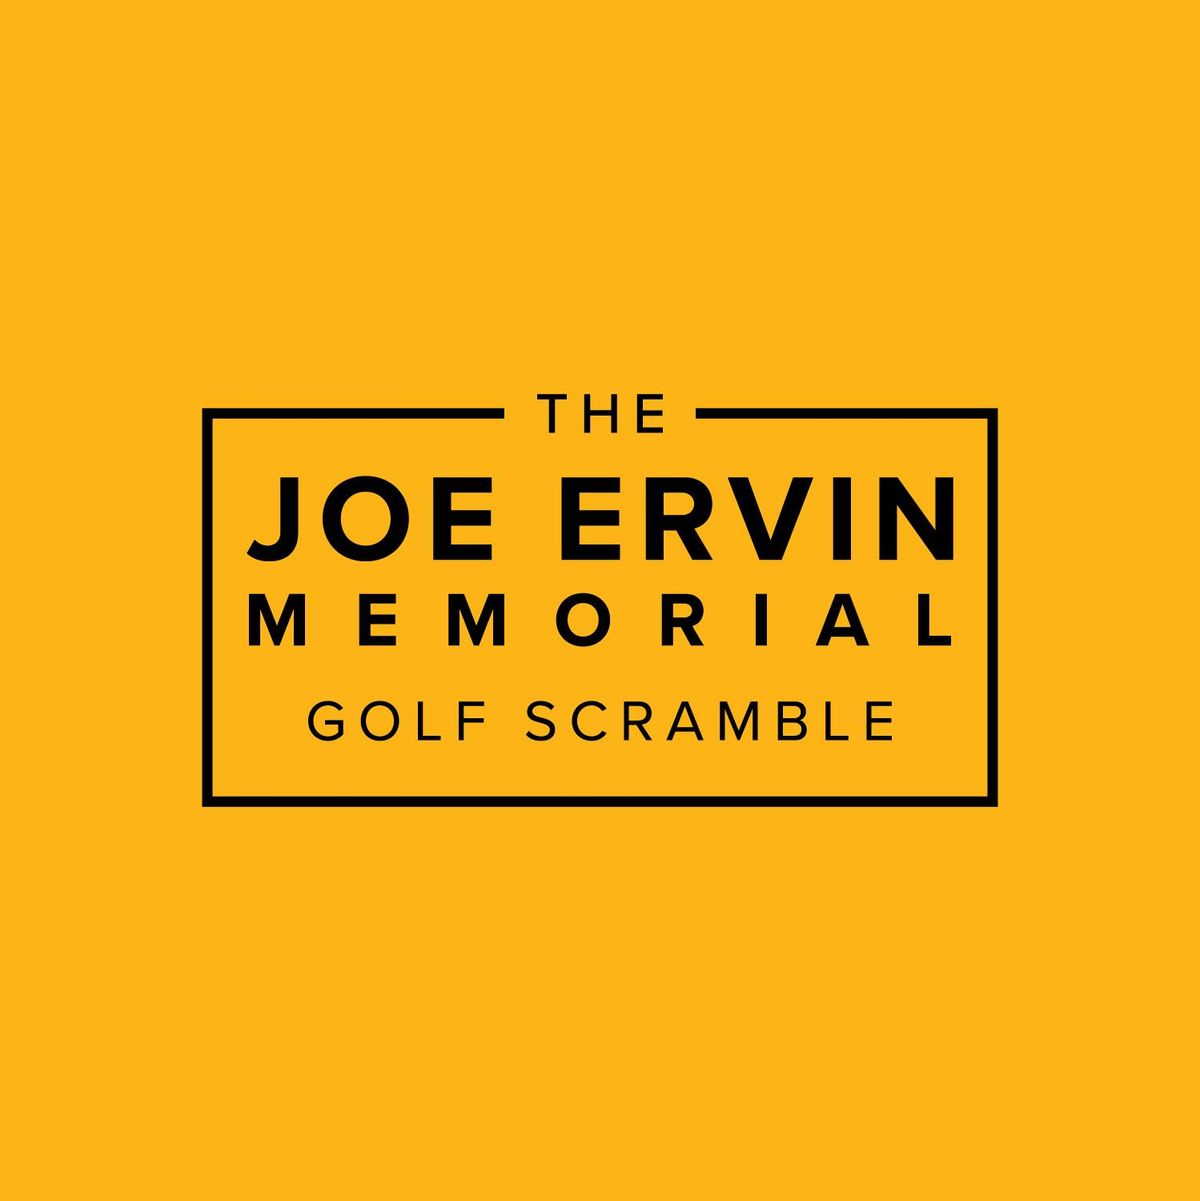 The Joe Ervin Memorial Golf Scramble